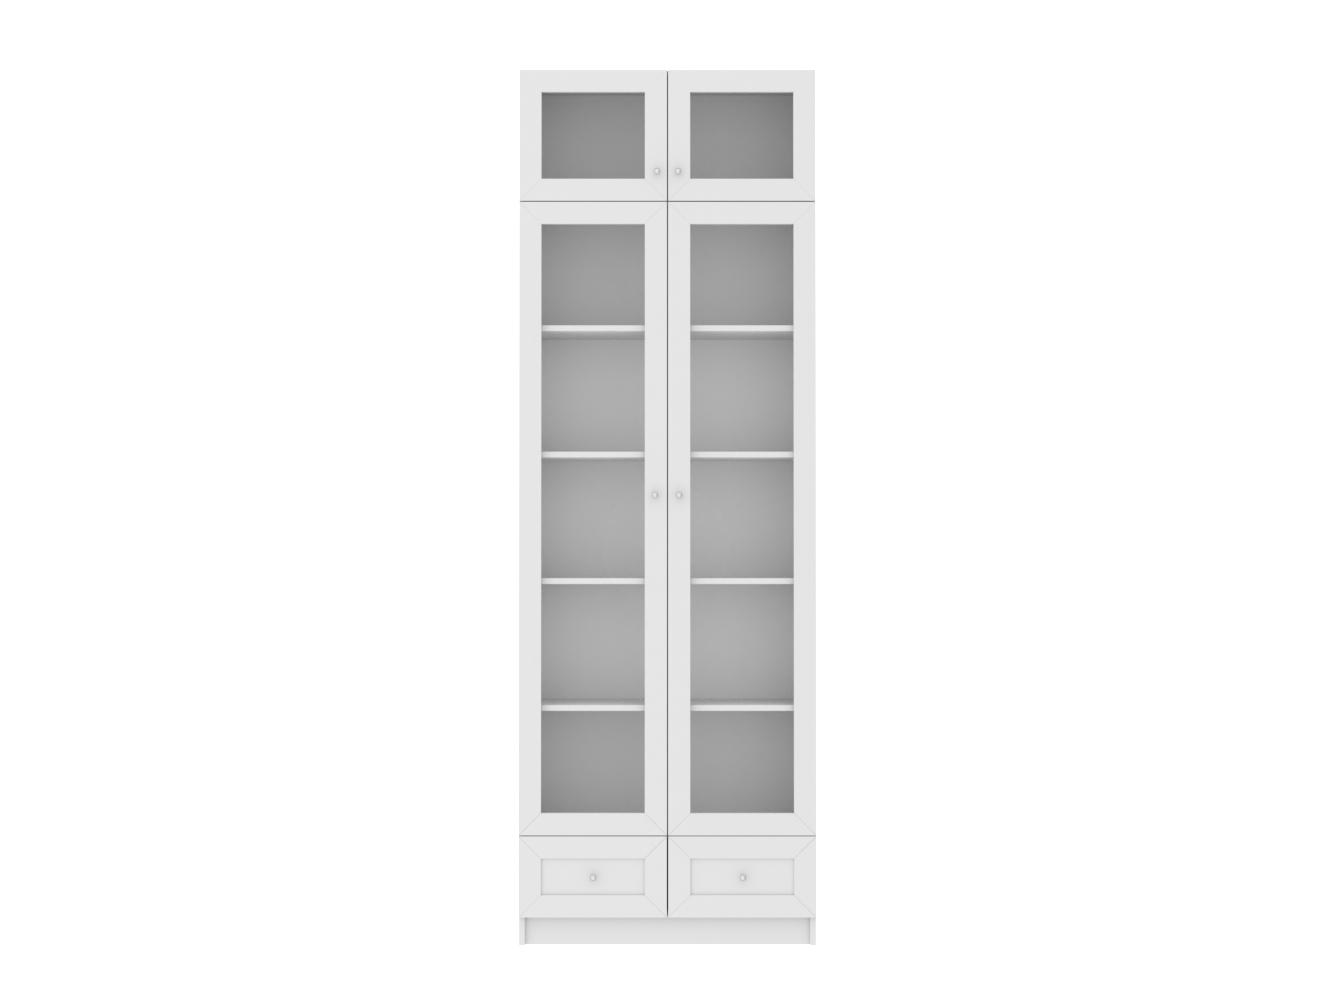 Книжный шкаф Билли 323 white ИКЕА (IKEA) изображение товара